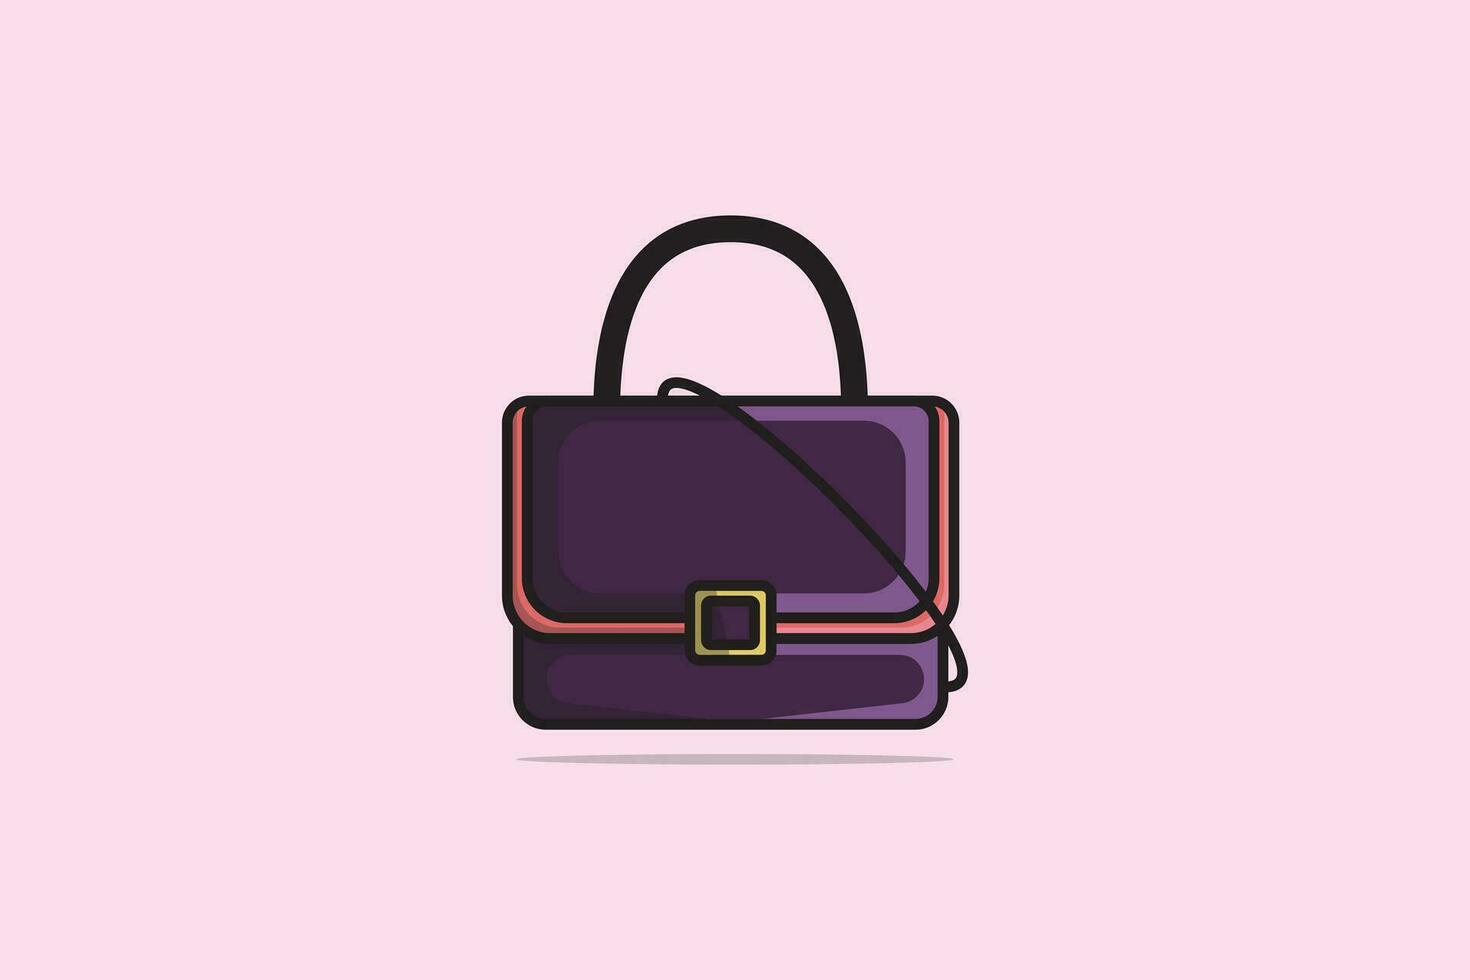 Purple Luxury Women Handbag or Purse Clutch Bag vector illustration. Beauty fashion objects icon concept. Elegant ladies bright leather bag vector design.